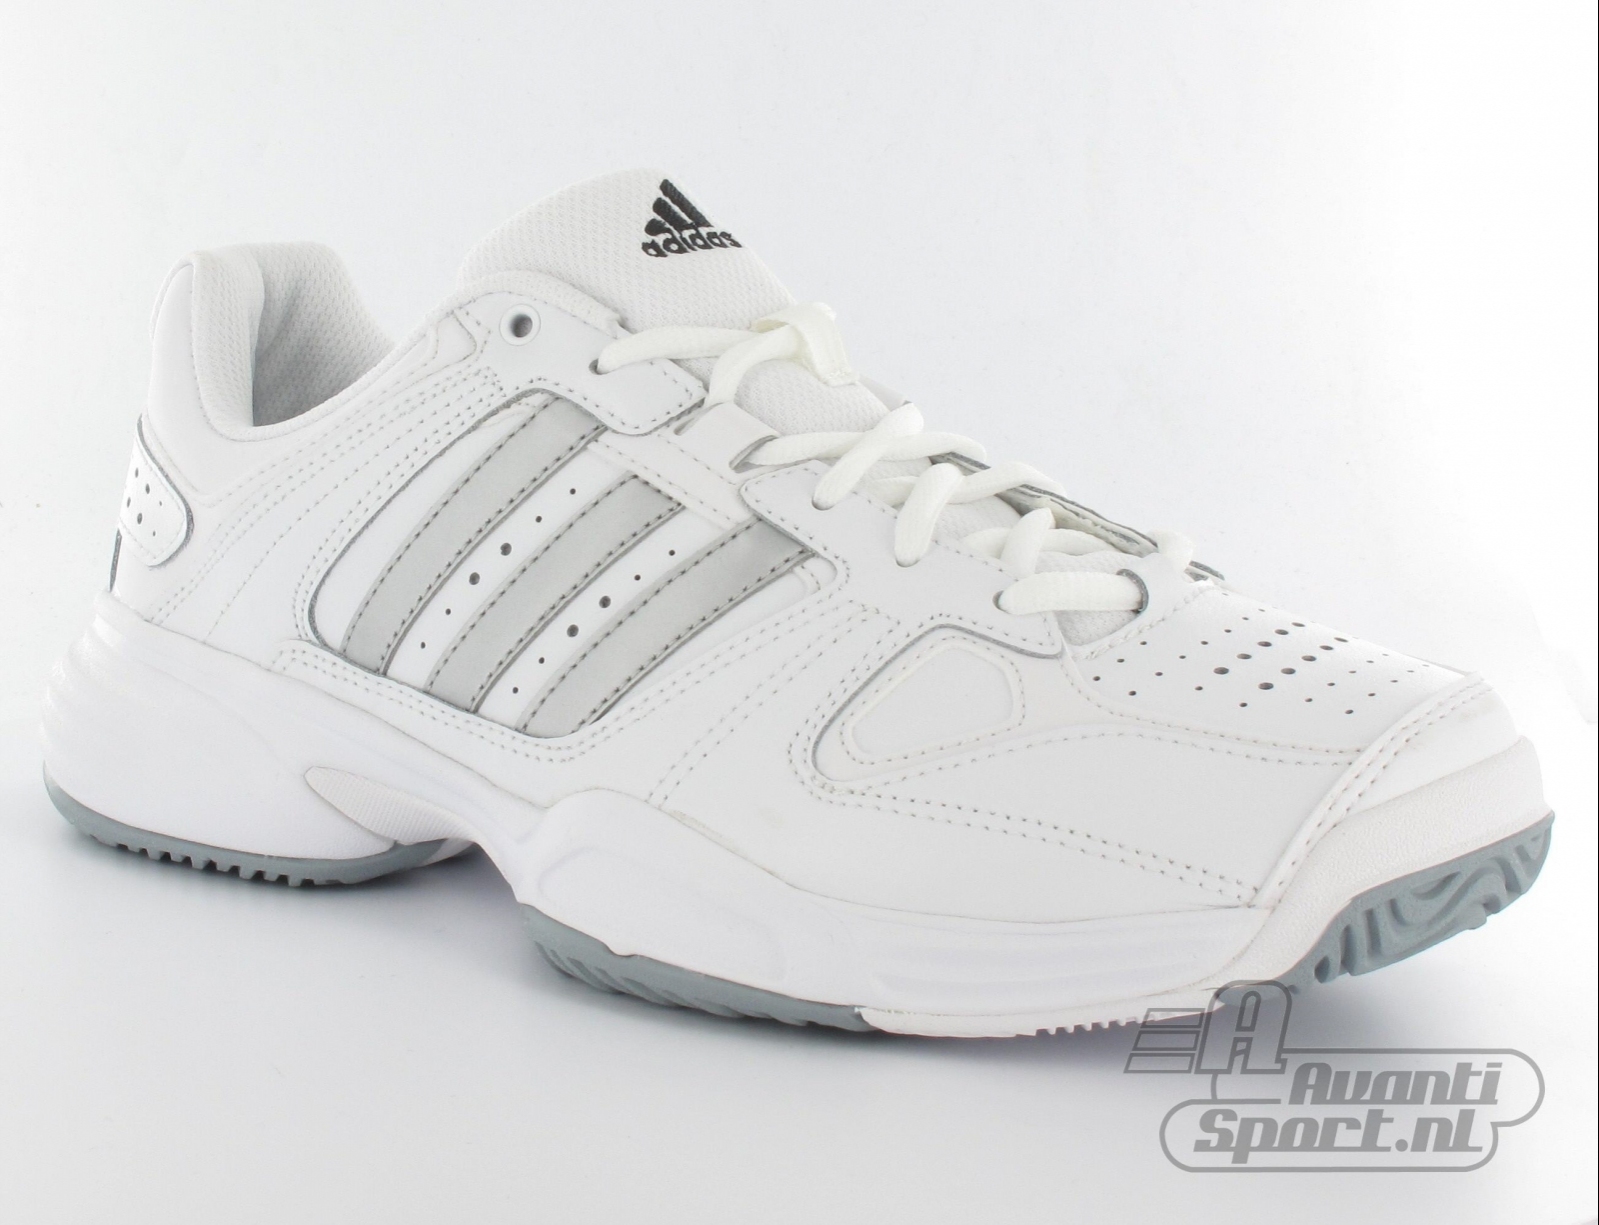 Avantisport - Adidas - Ambition Str V Men's - White/metallic Silver